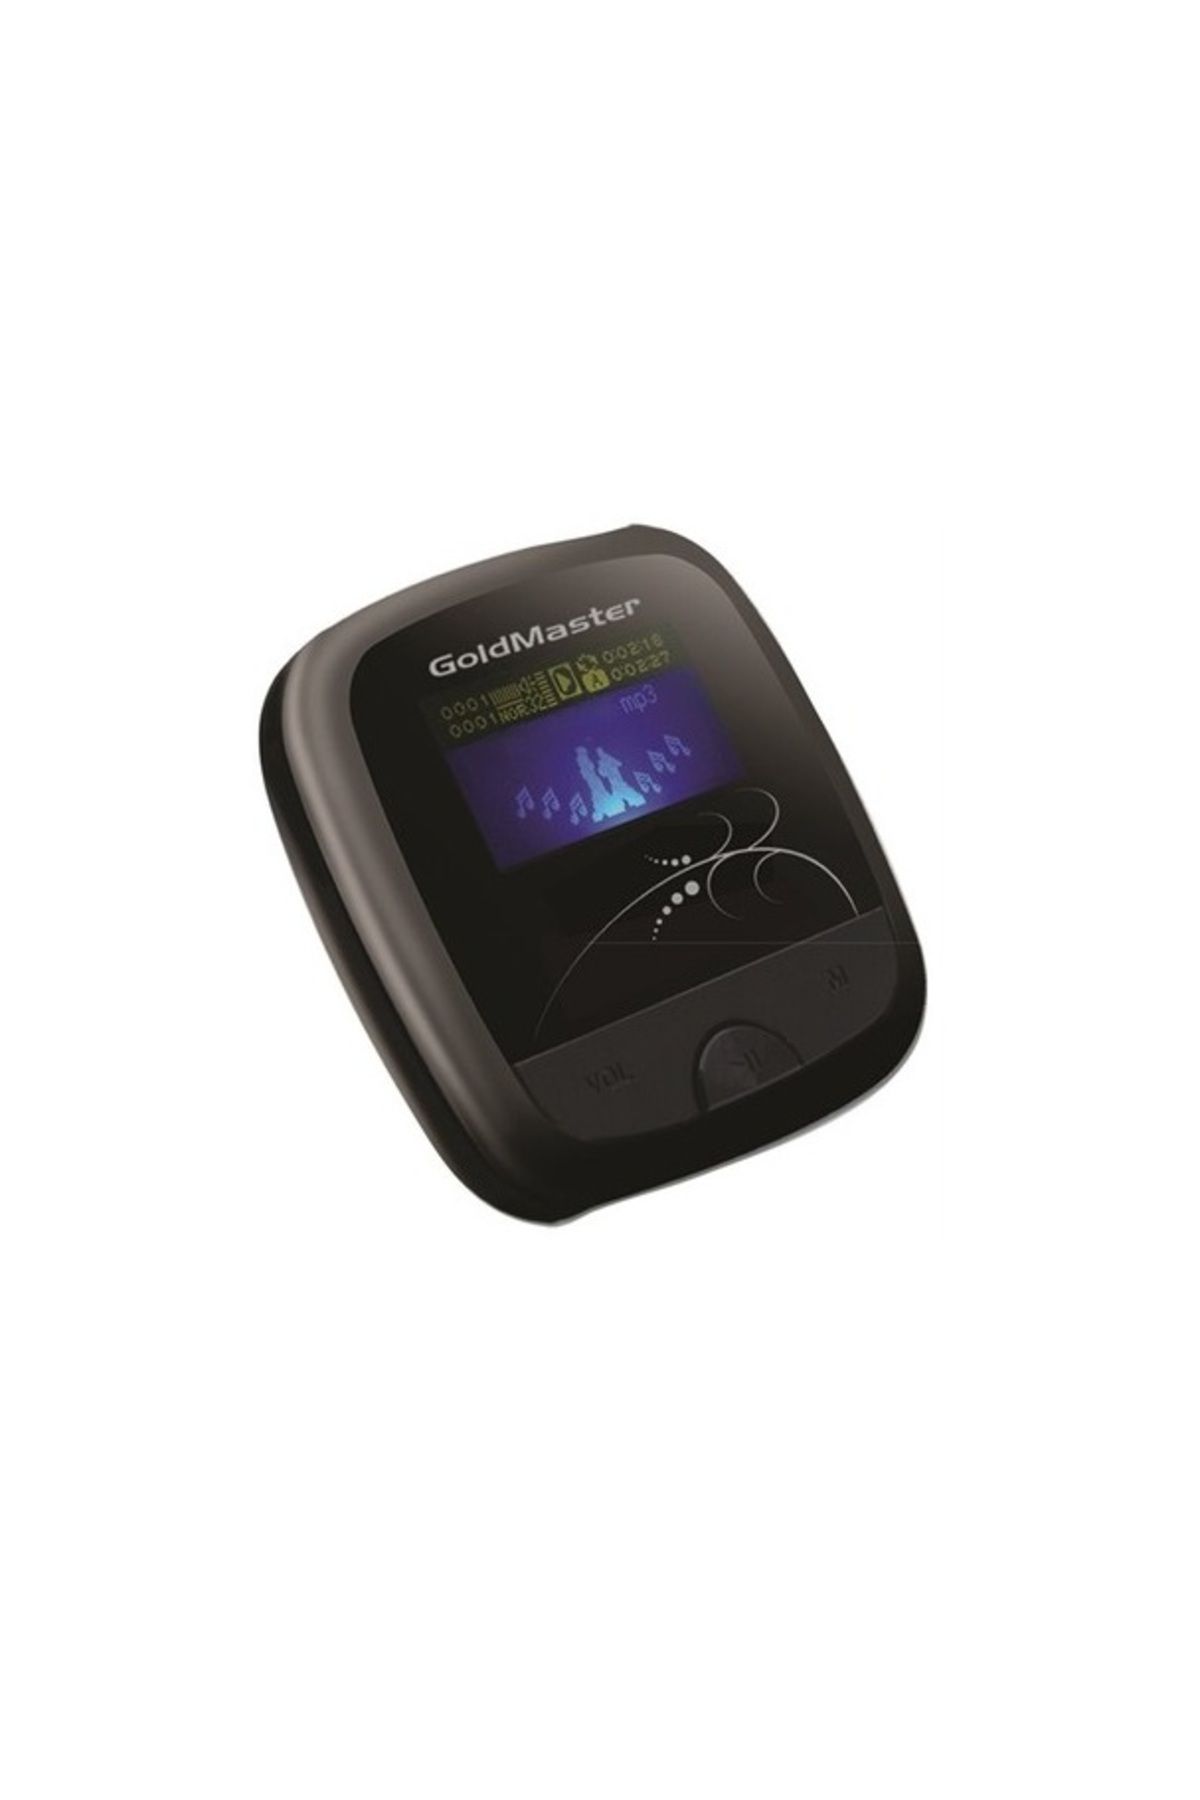 GoldMaster MP3-178 4GB Hafıza Ekranlı Ses Kayıt Özellikli Hoparlörlü MP3 Çalar